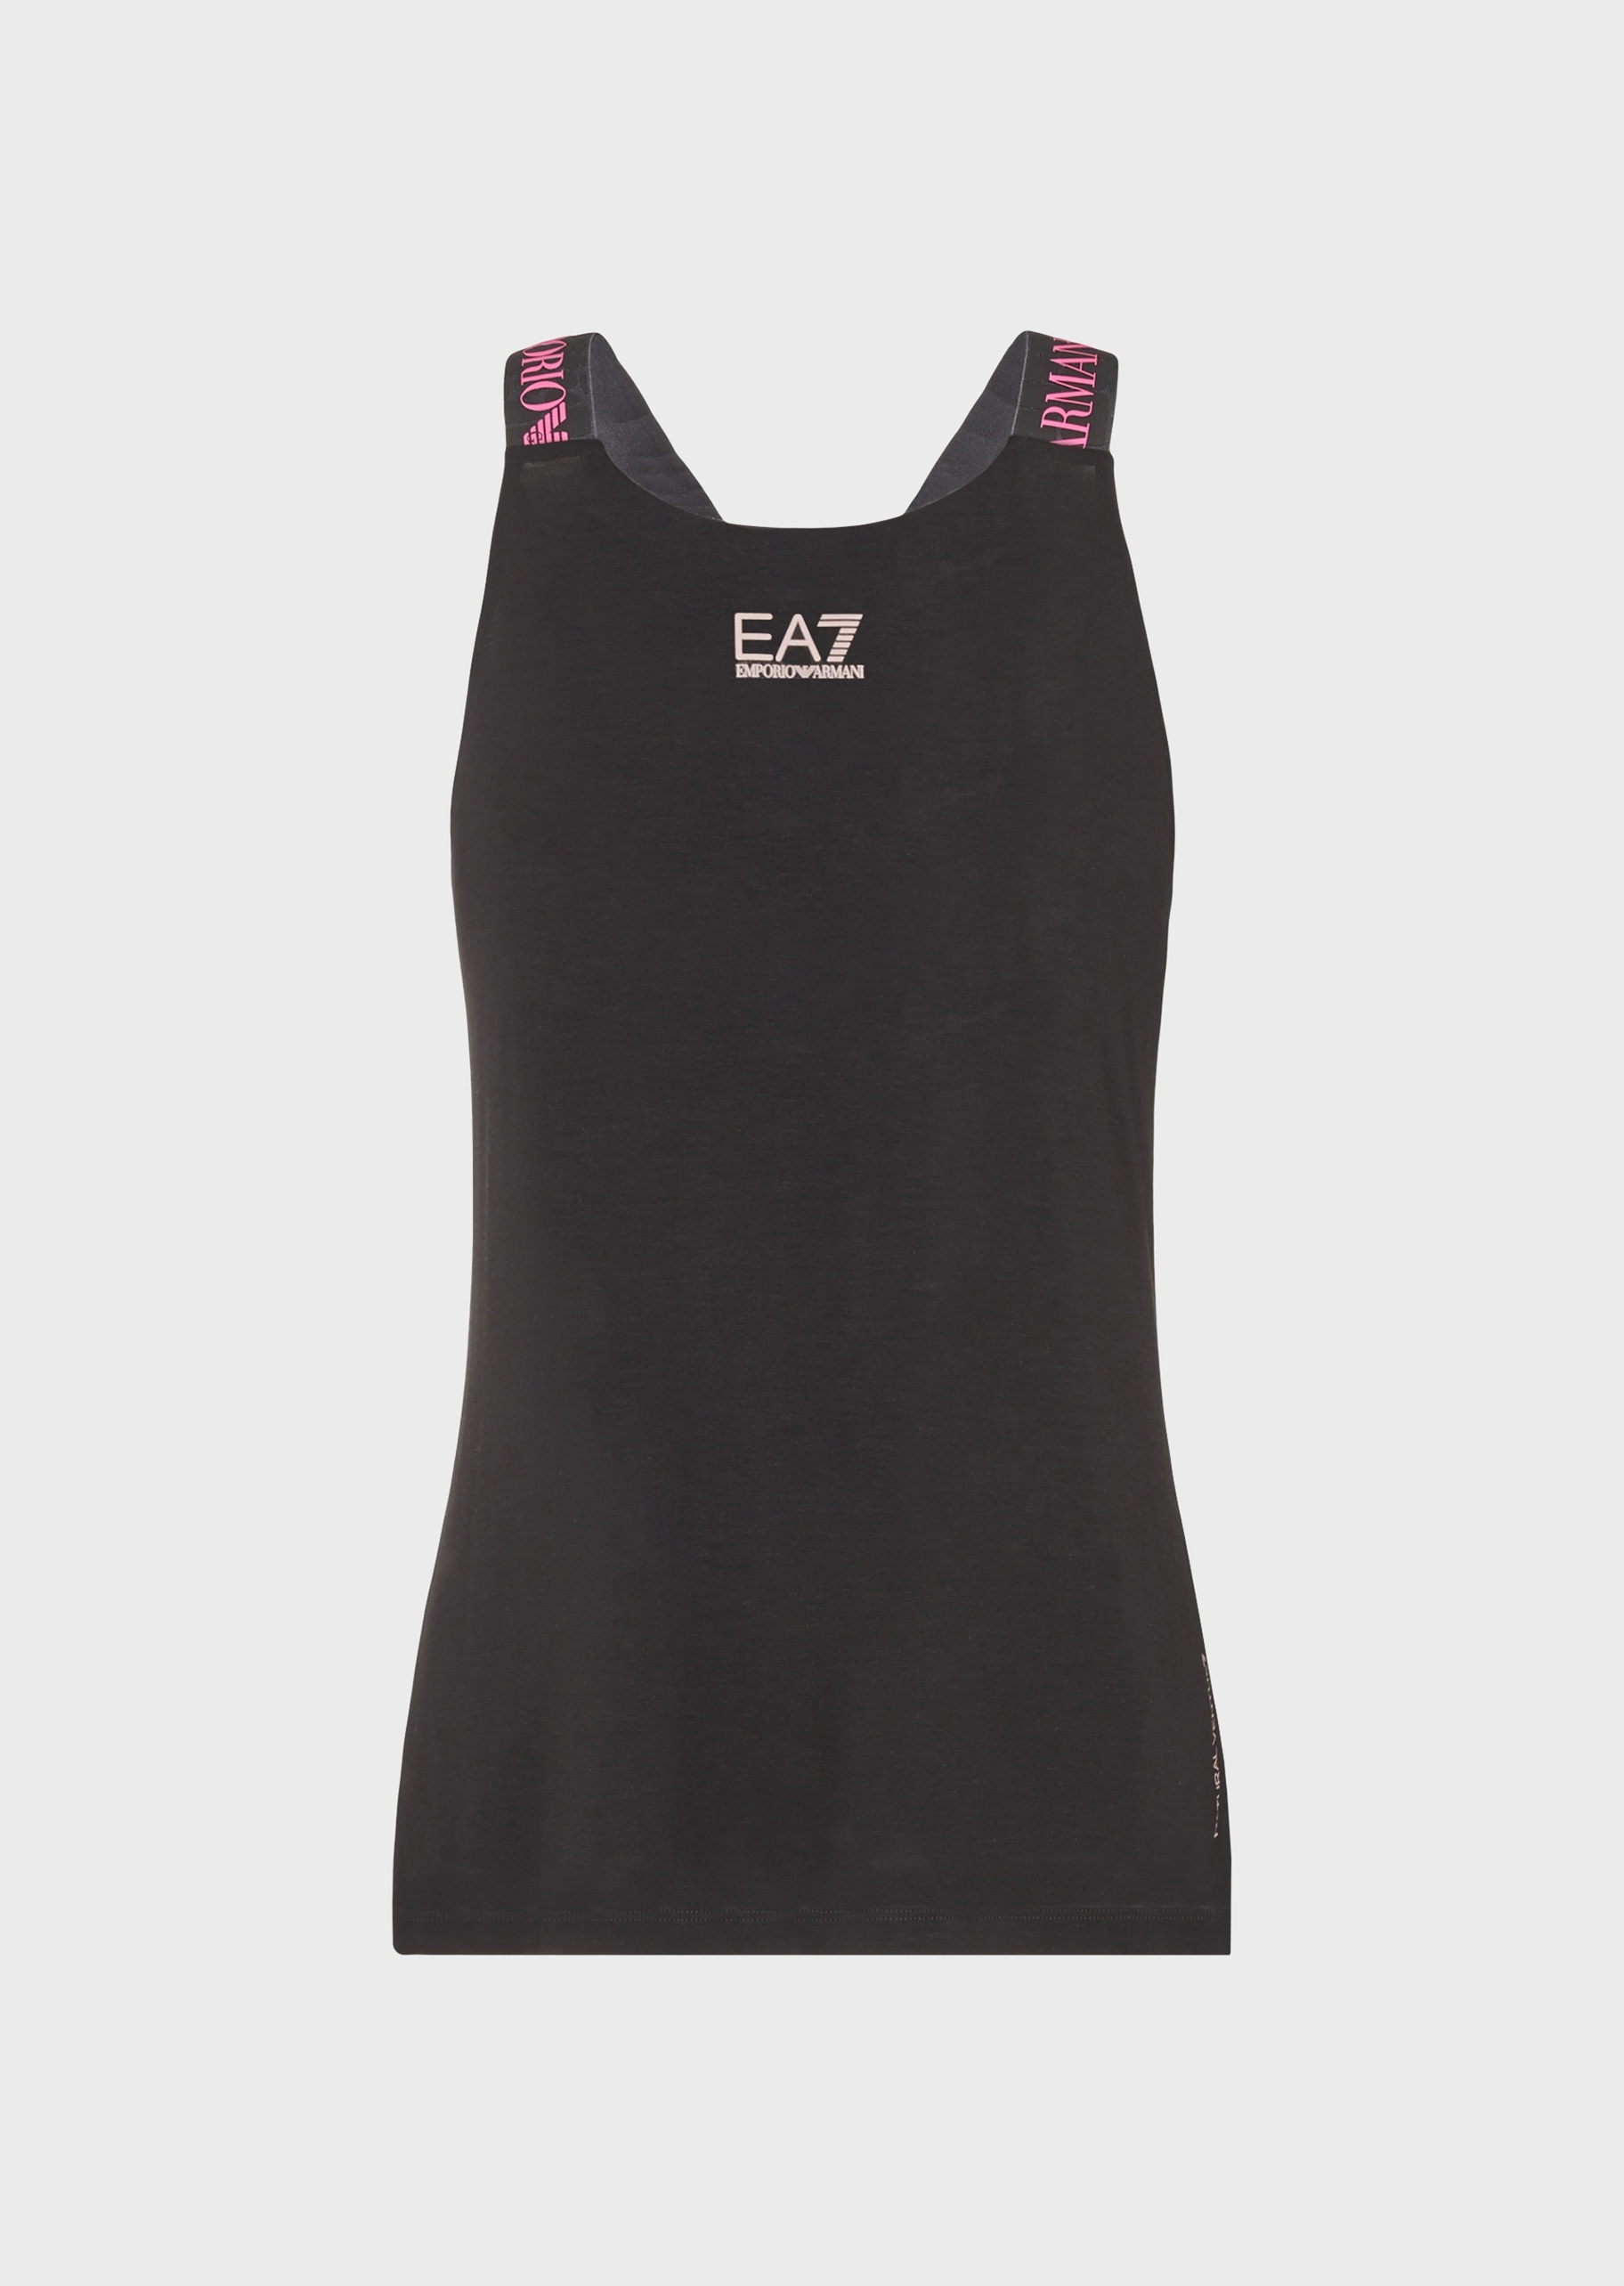 EA7 标识交叉肩带背心